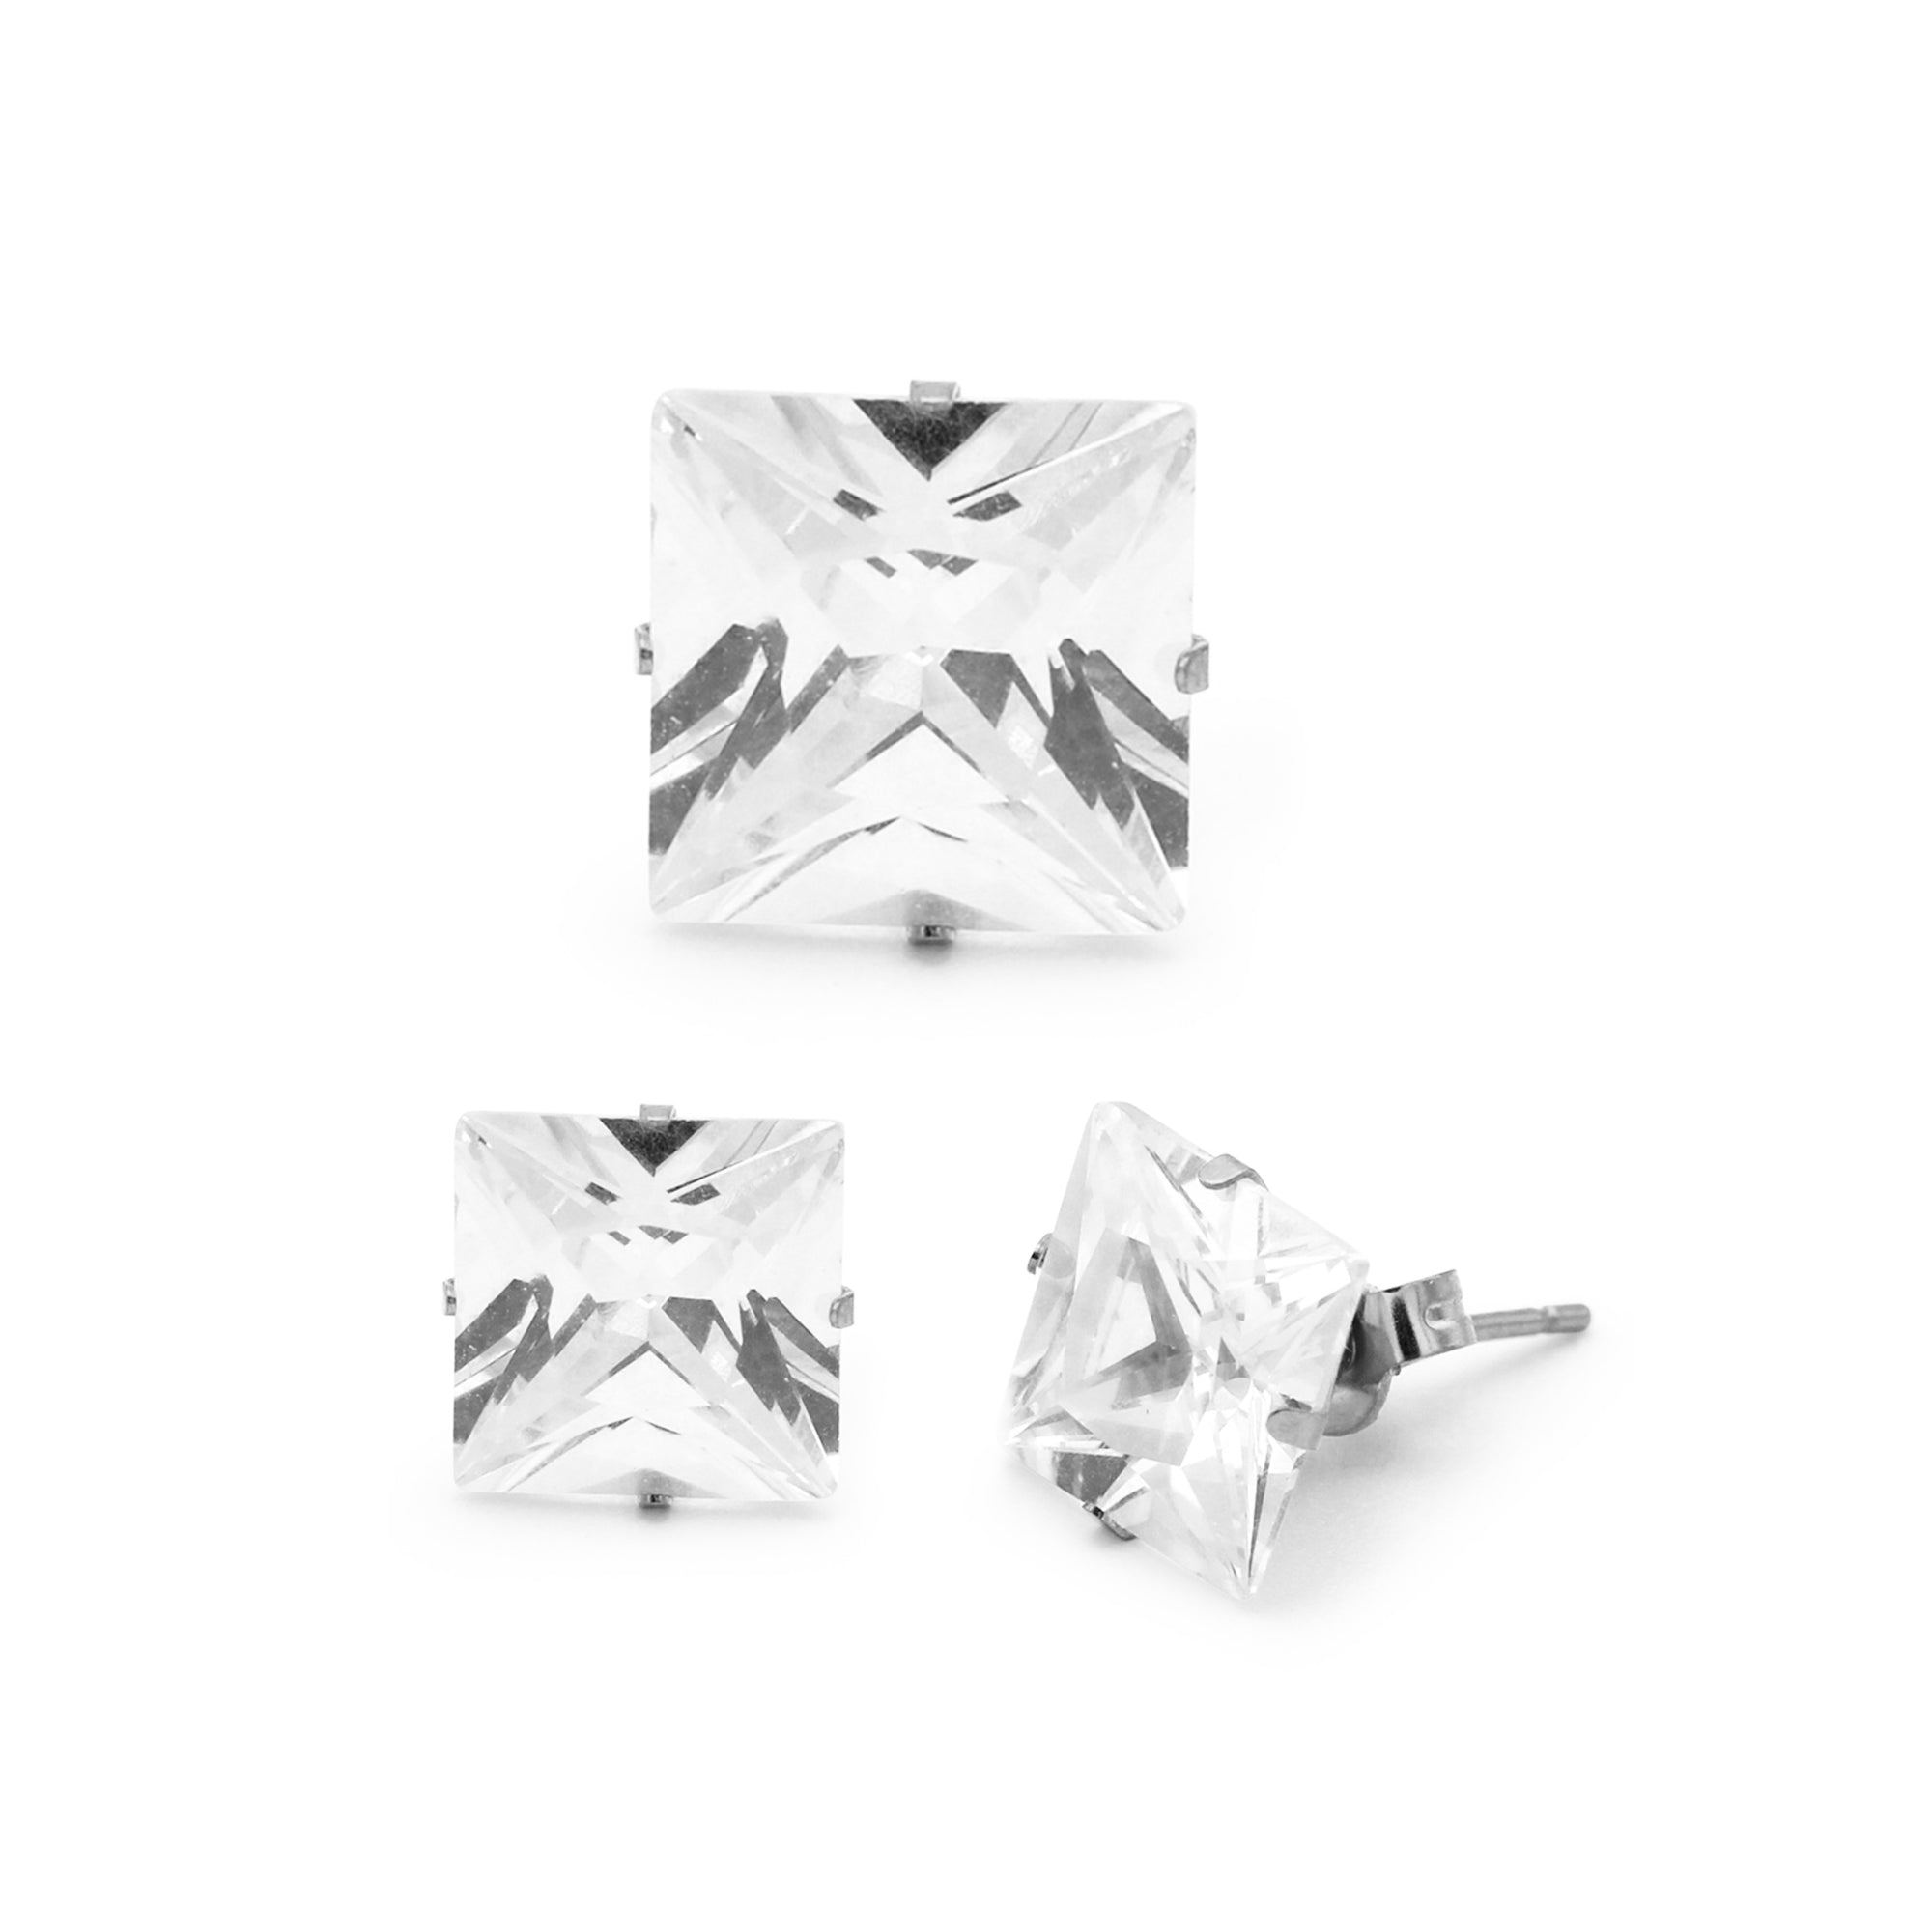 Purchase the High-Quality Men's Swarovski Crystal Earrings | GLAMIRA.com